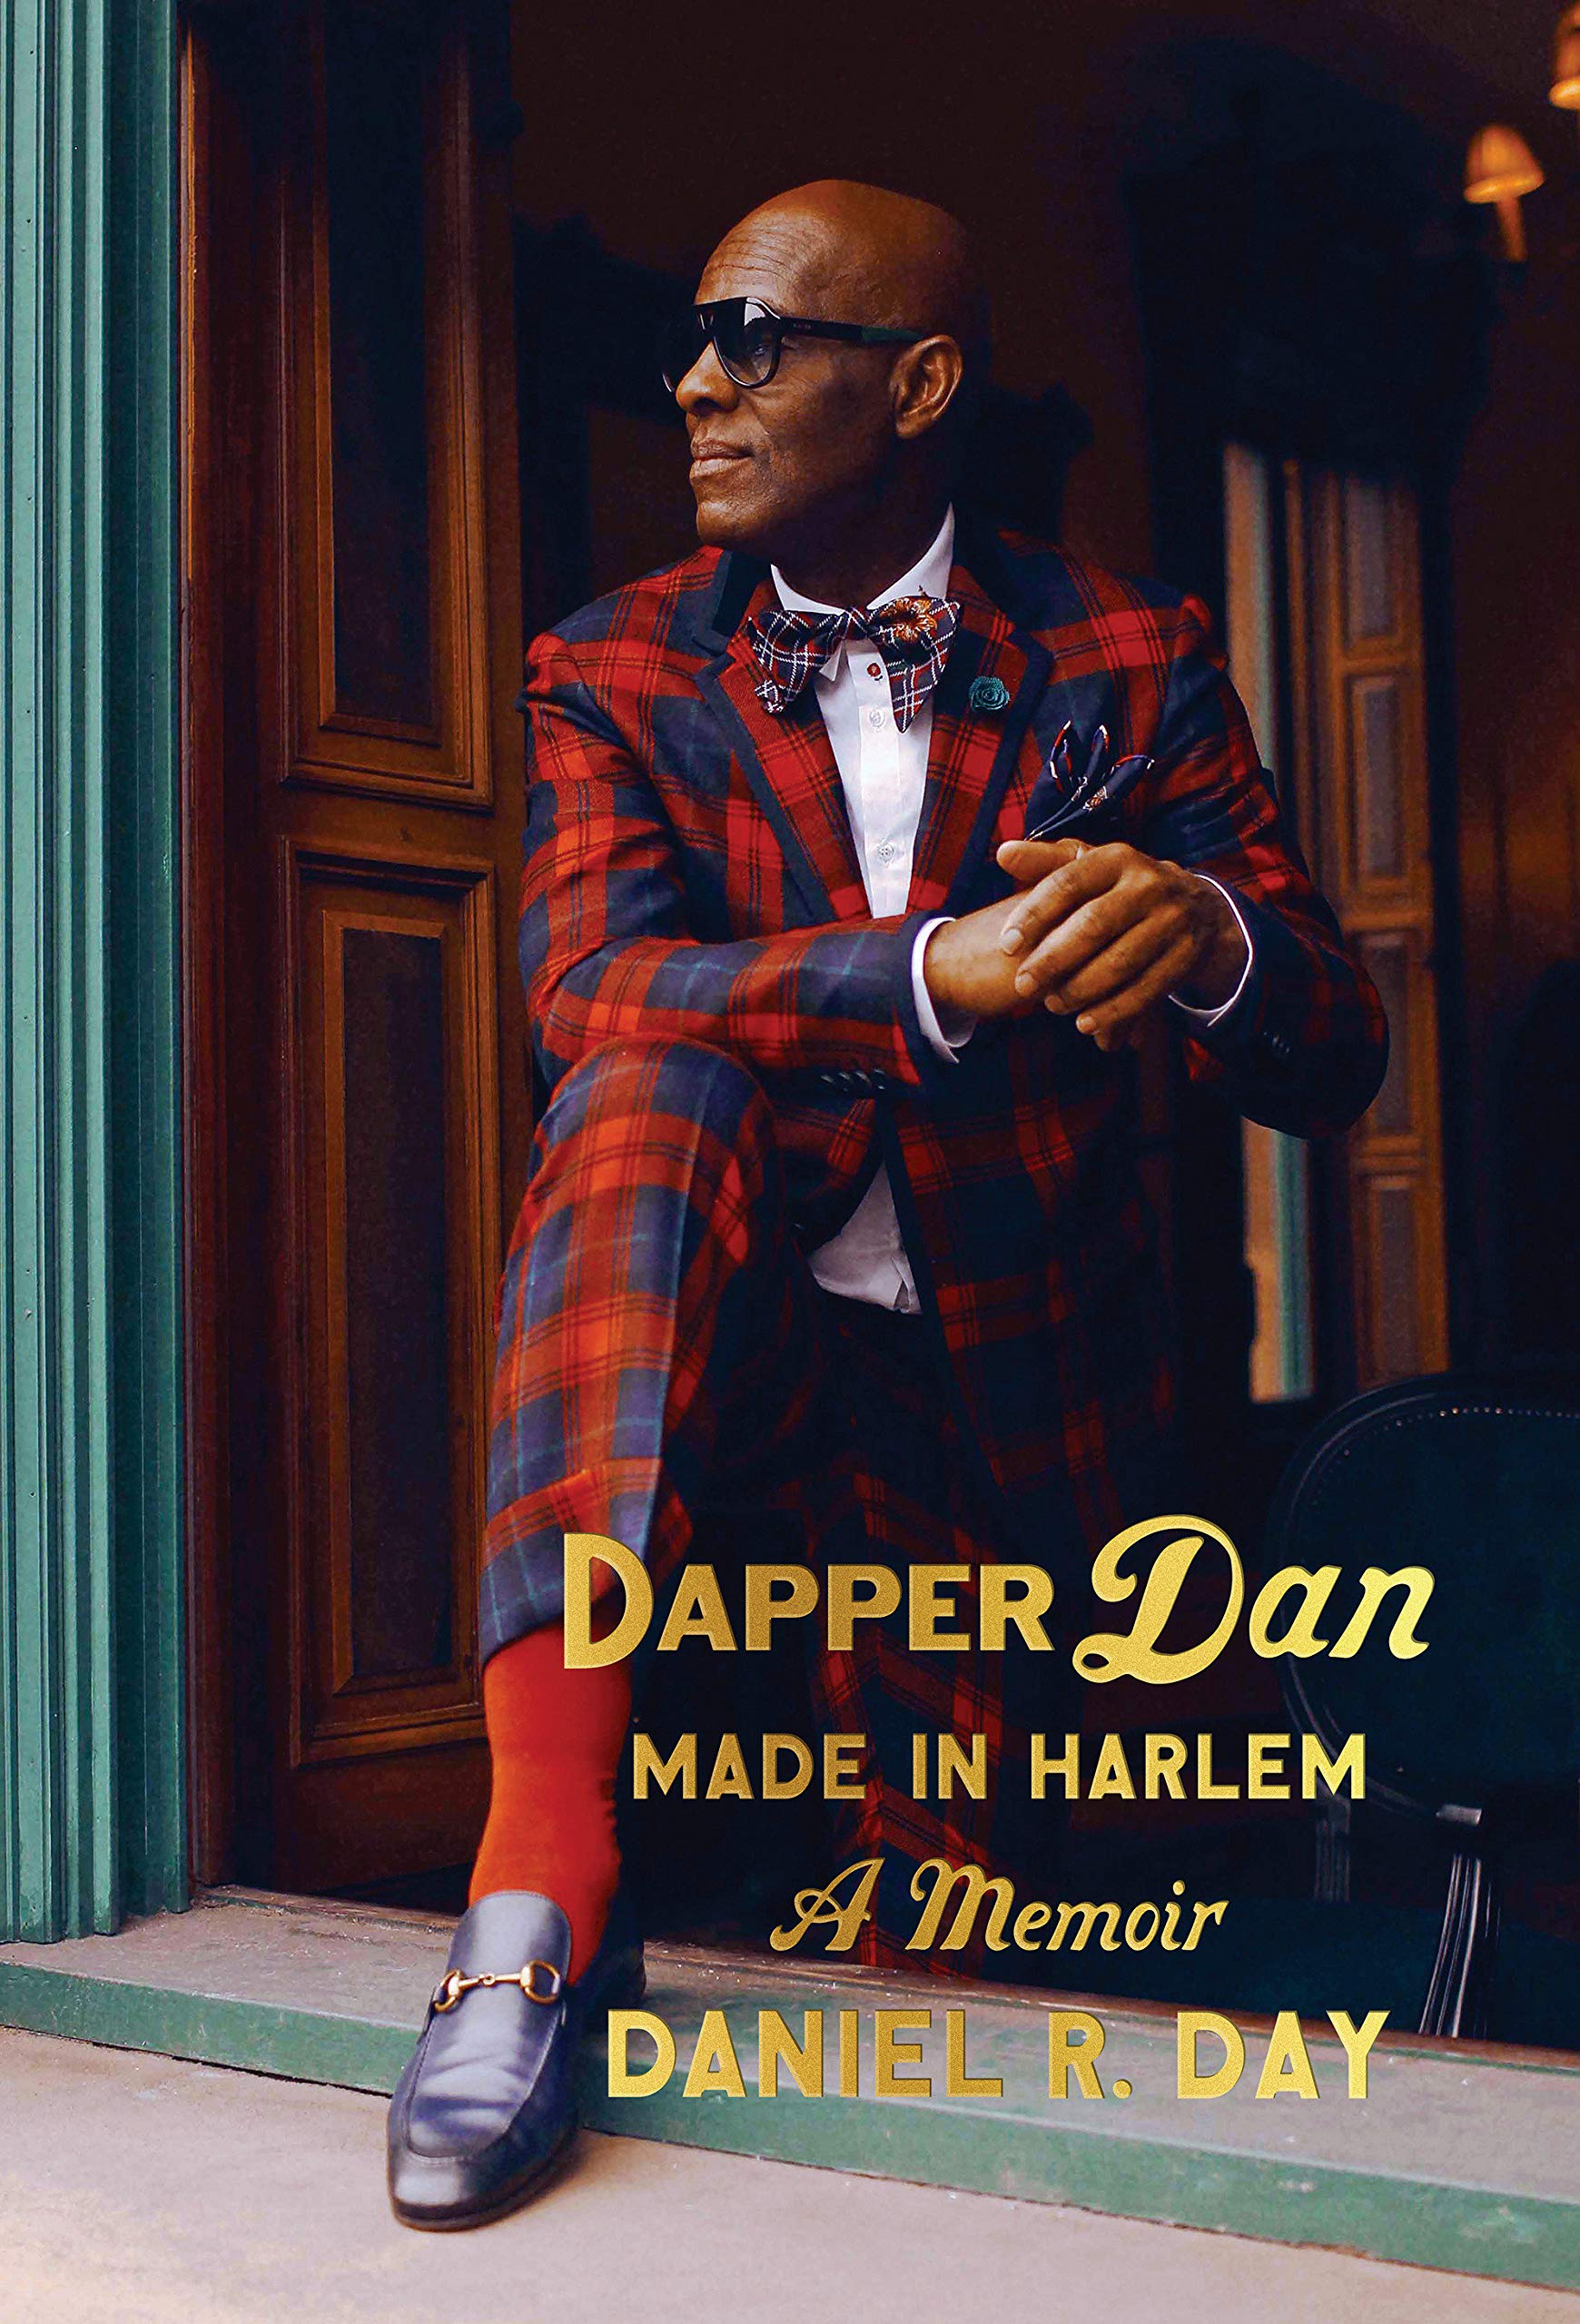 The Fashion Outlaw Dapper Dan - The New York Times